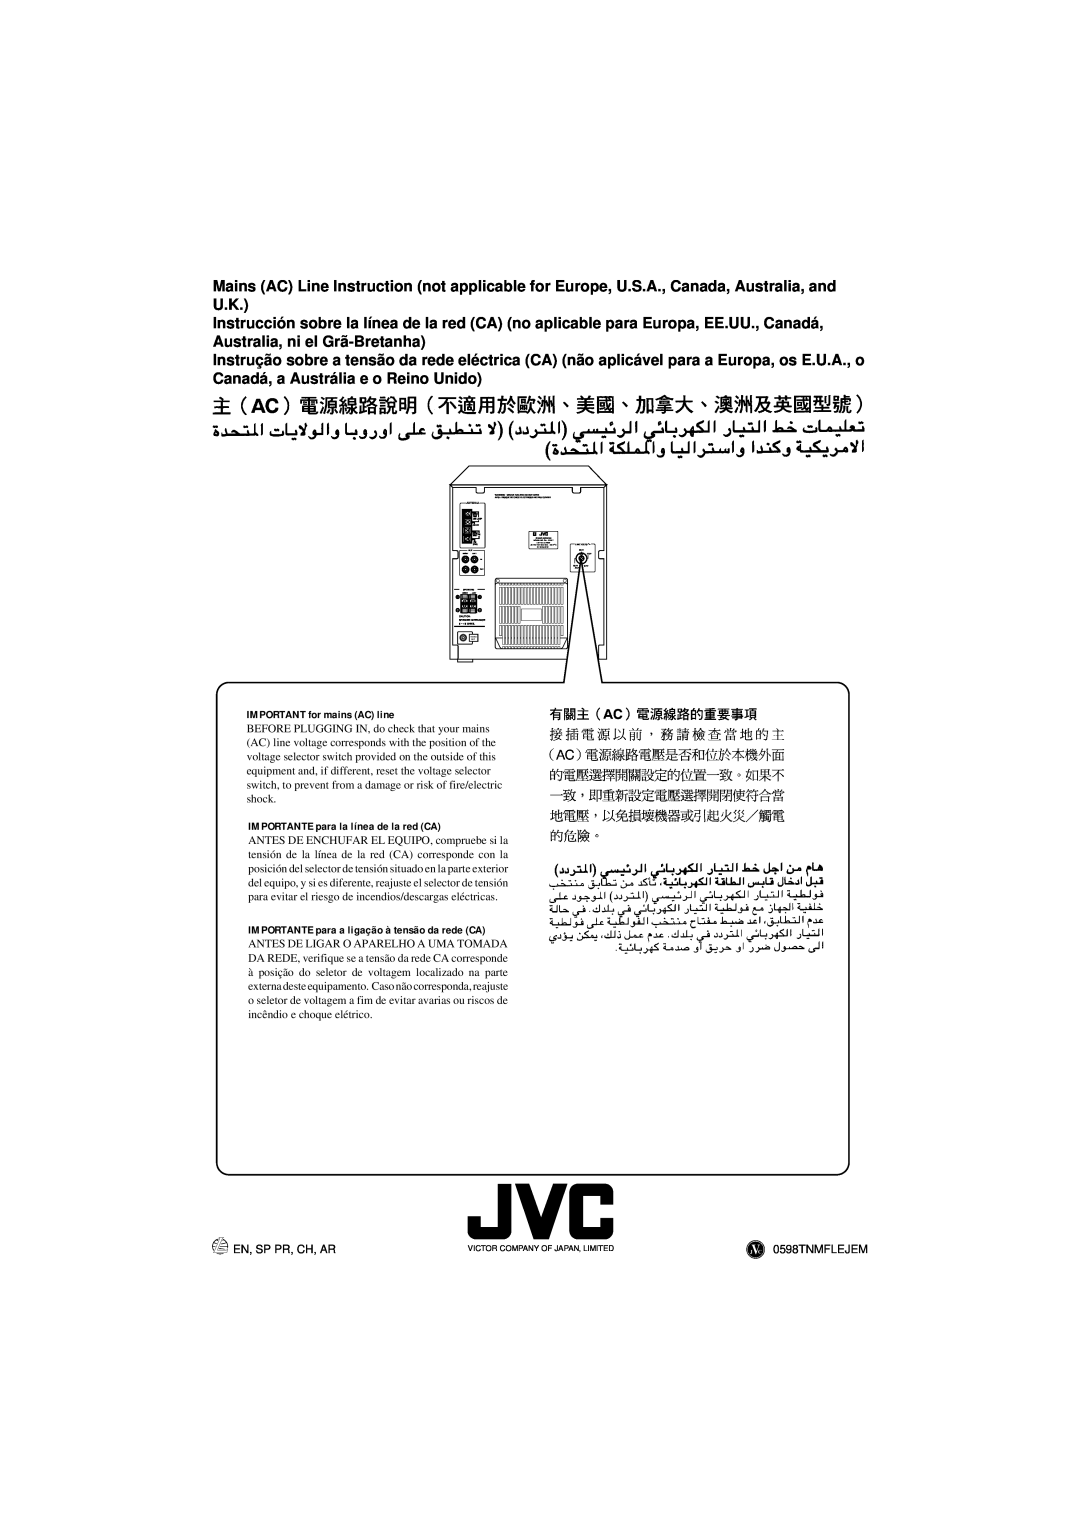 JVC MX-V508T, MX-V588T manual IMPORTANT for mains AC line, IMPORTANTE para la línea de la red CA, JVC 0598TNMFLEJEM 